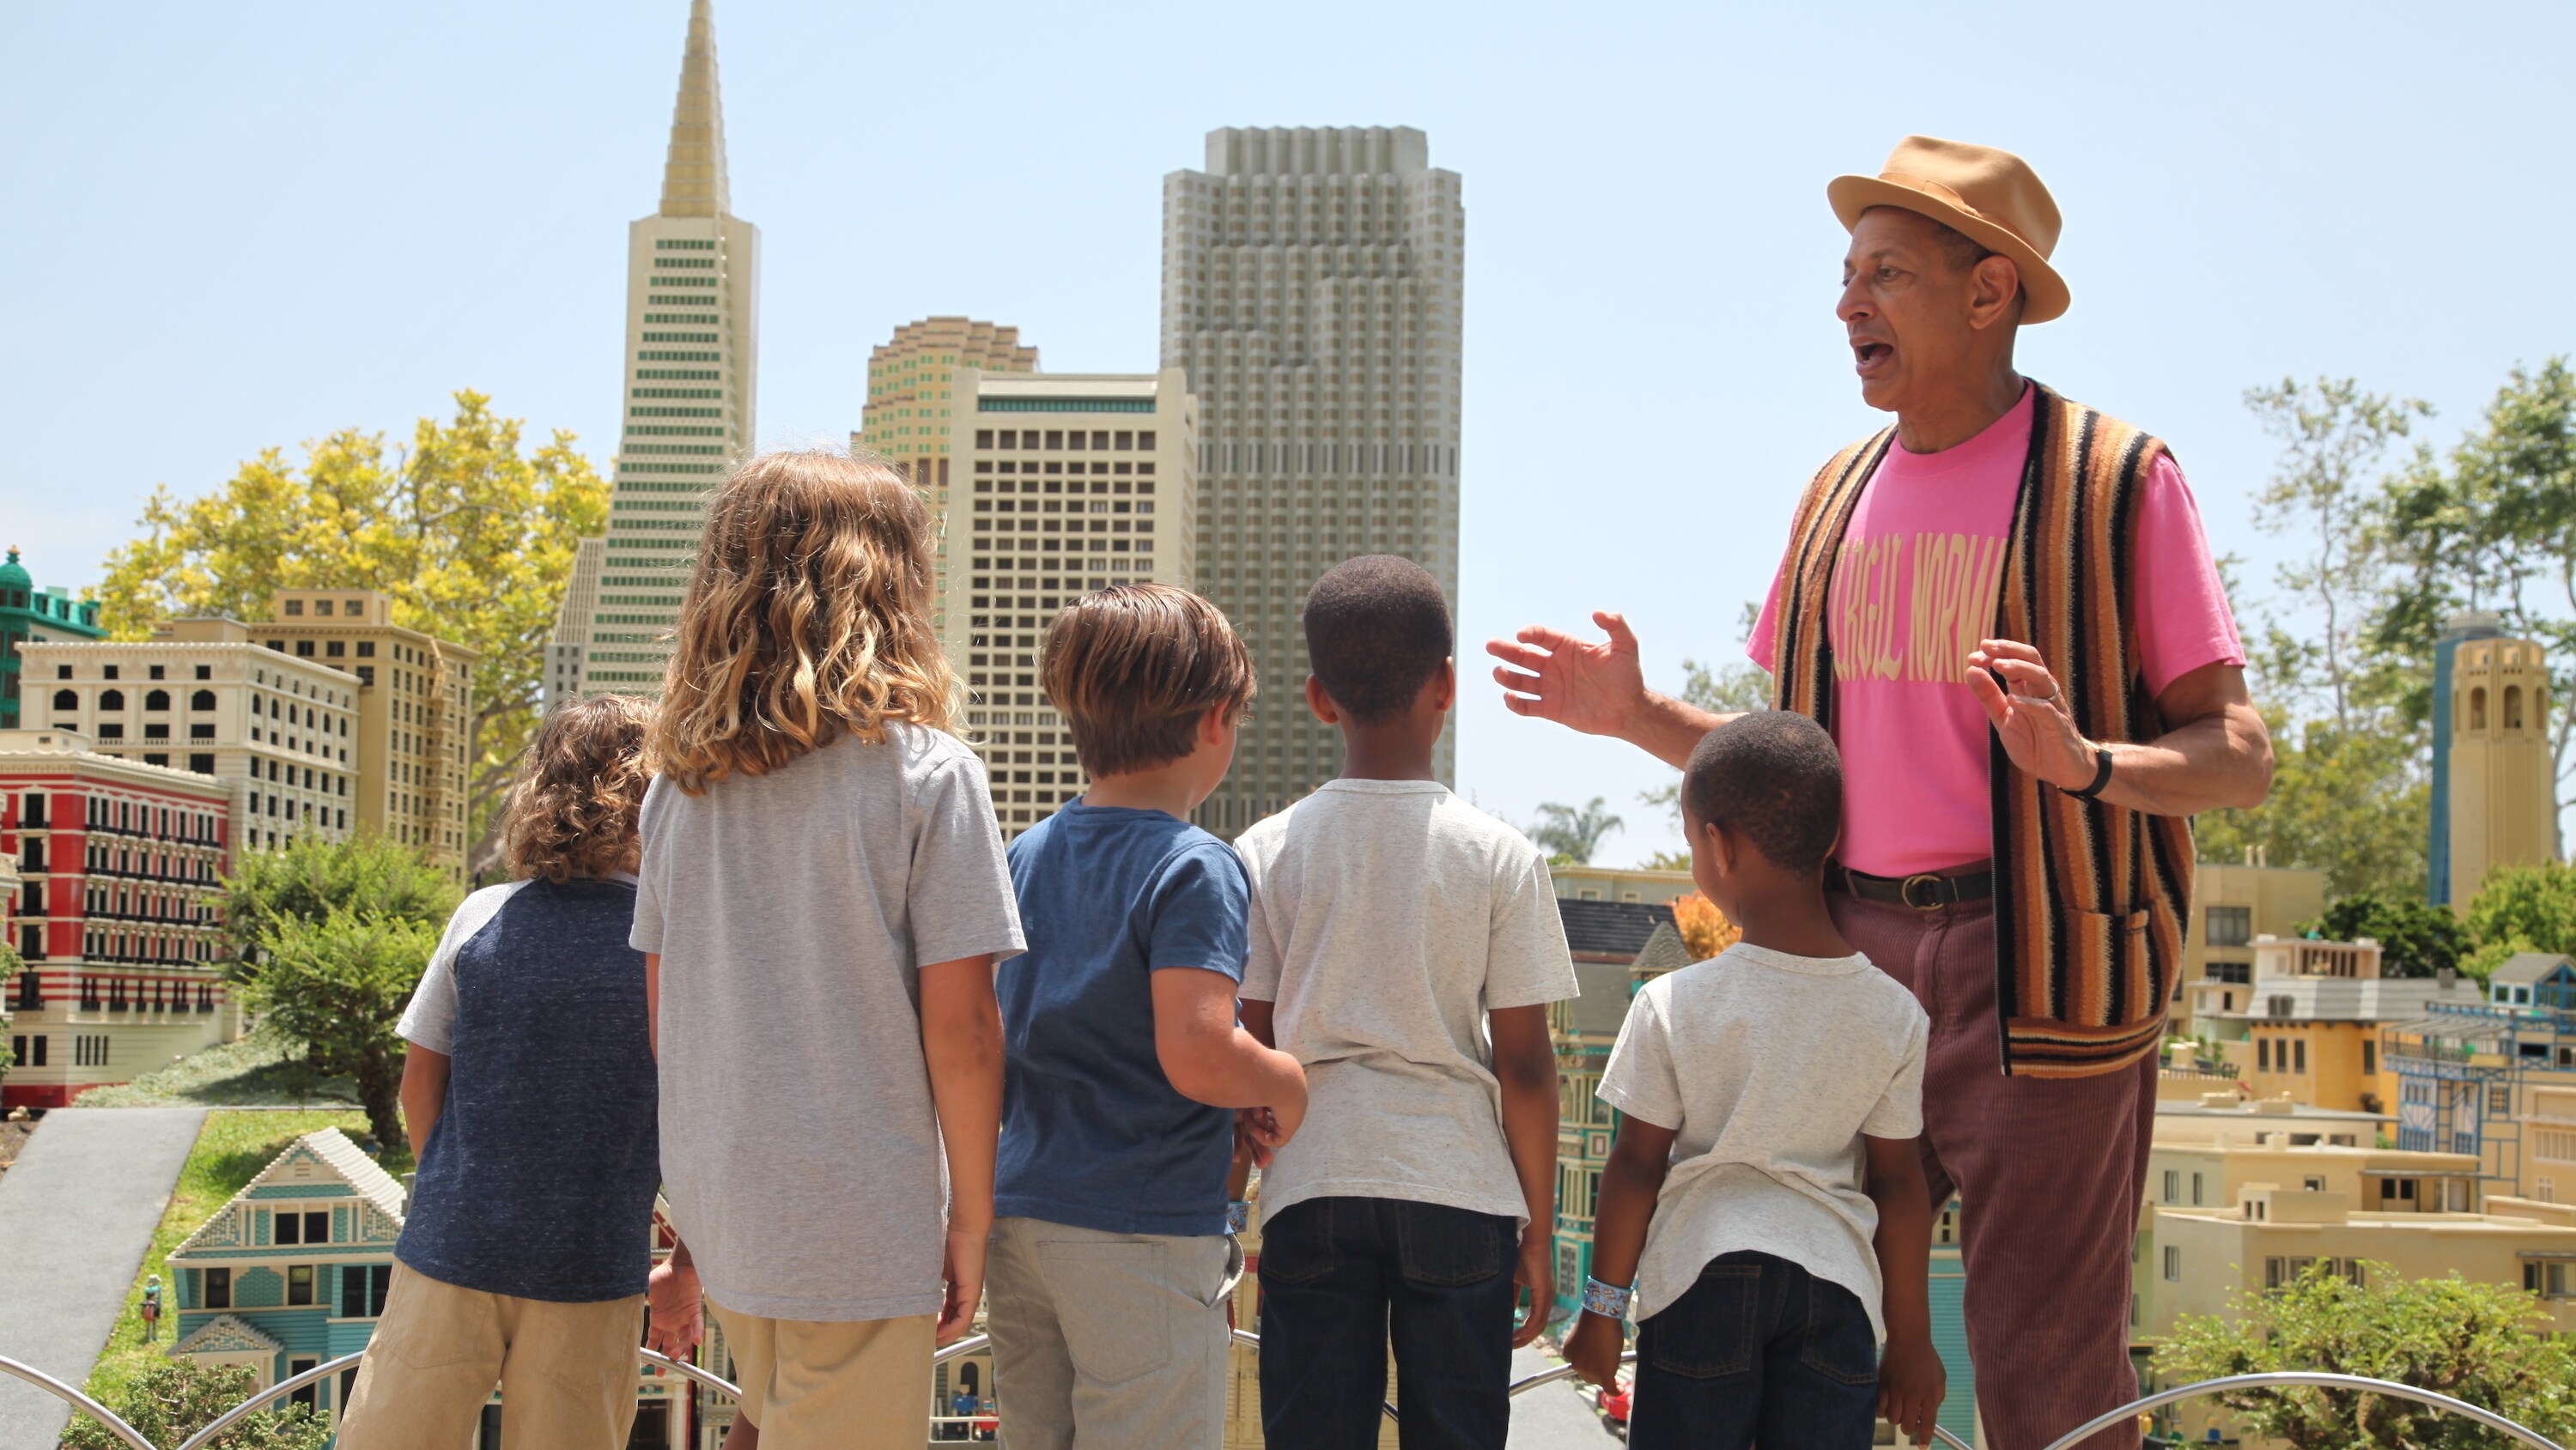 Carlsbad, CA - Jeff Goldblum (R) speaking with children in Legoland City. (Credit: National Geographic)